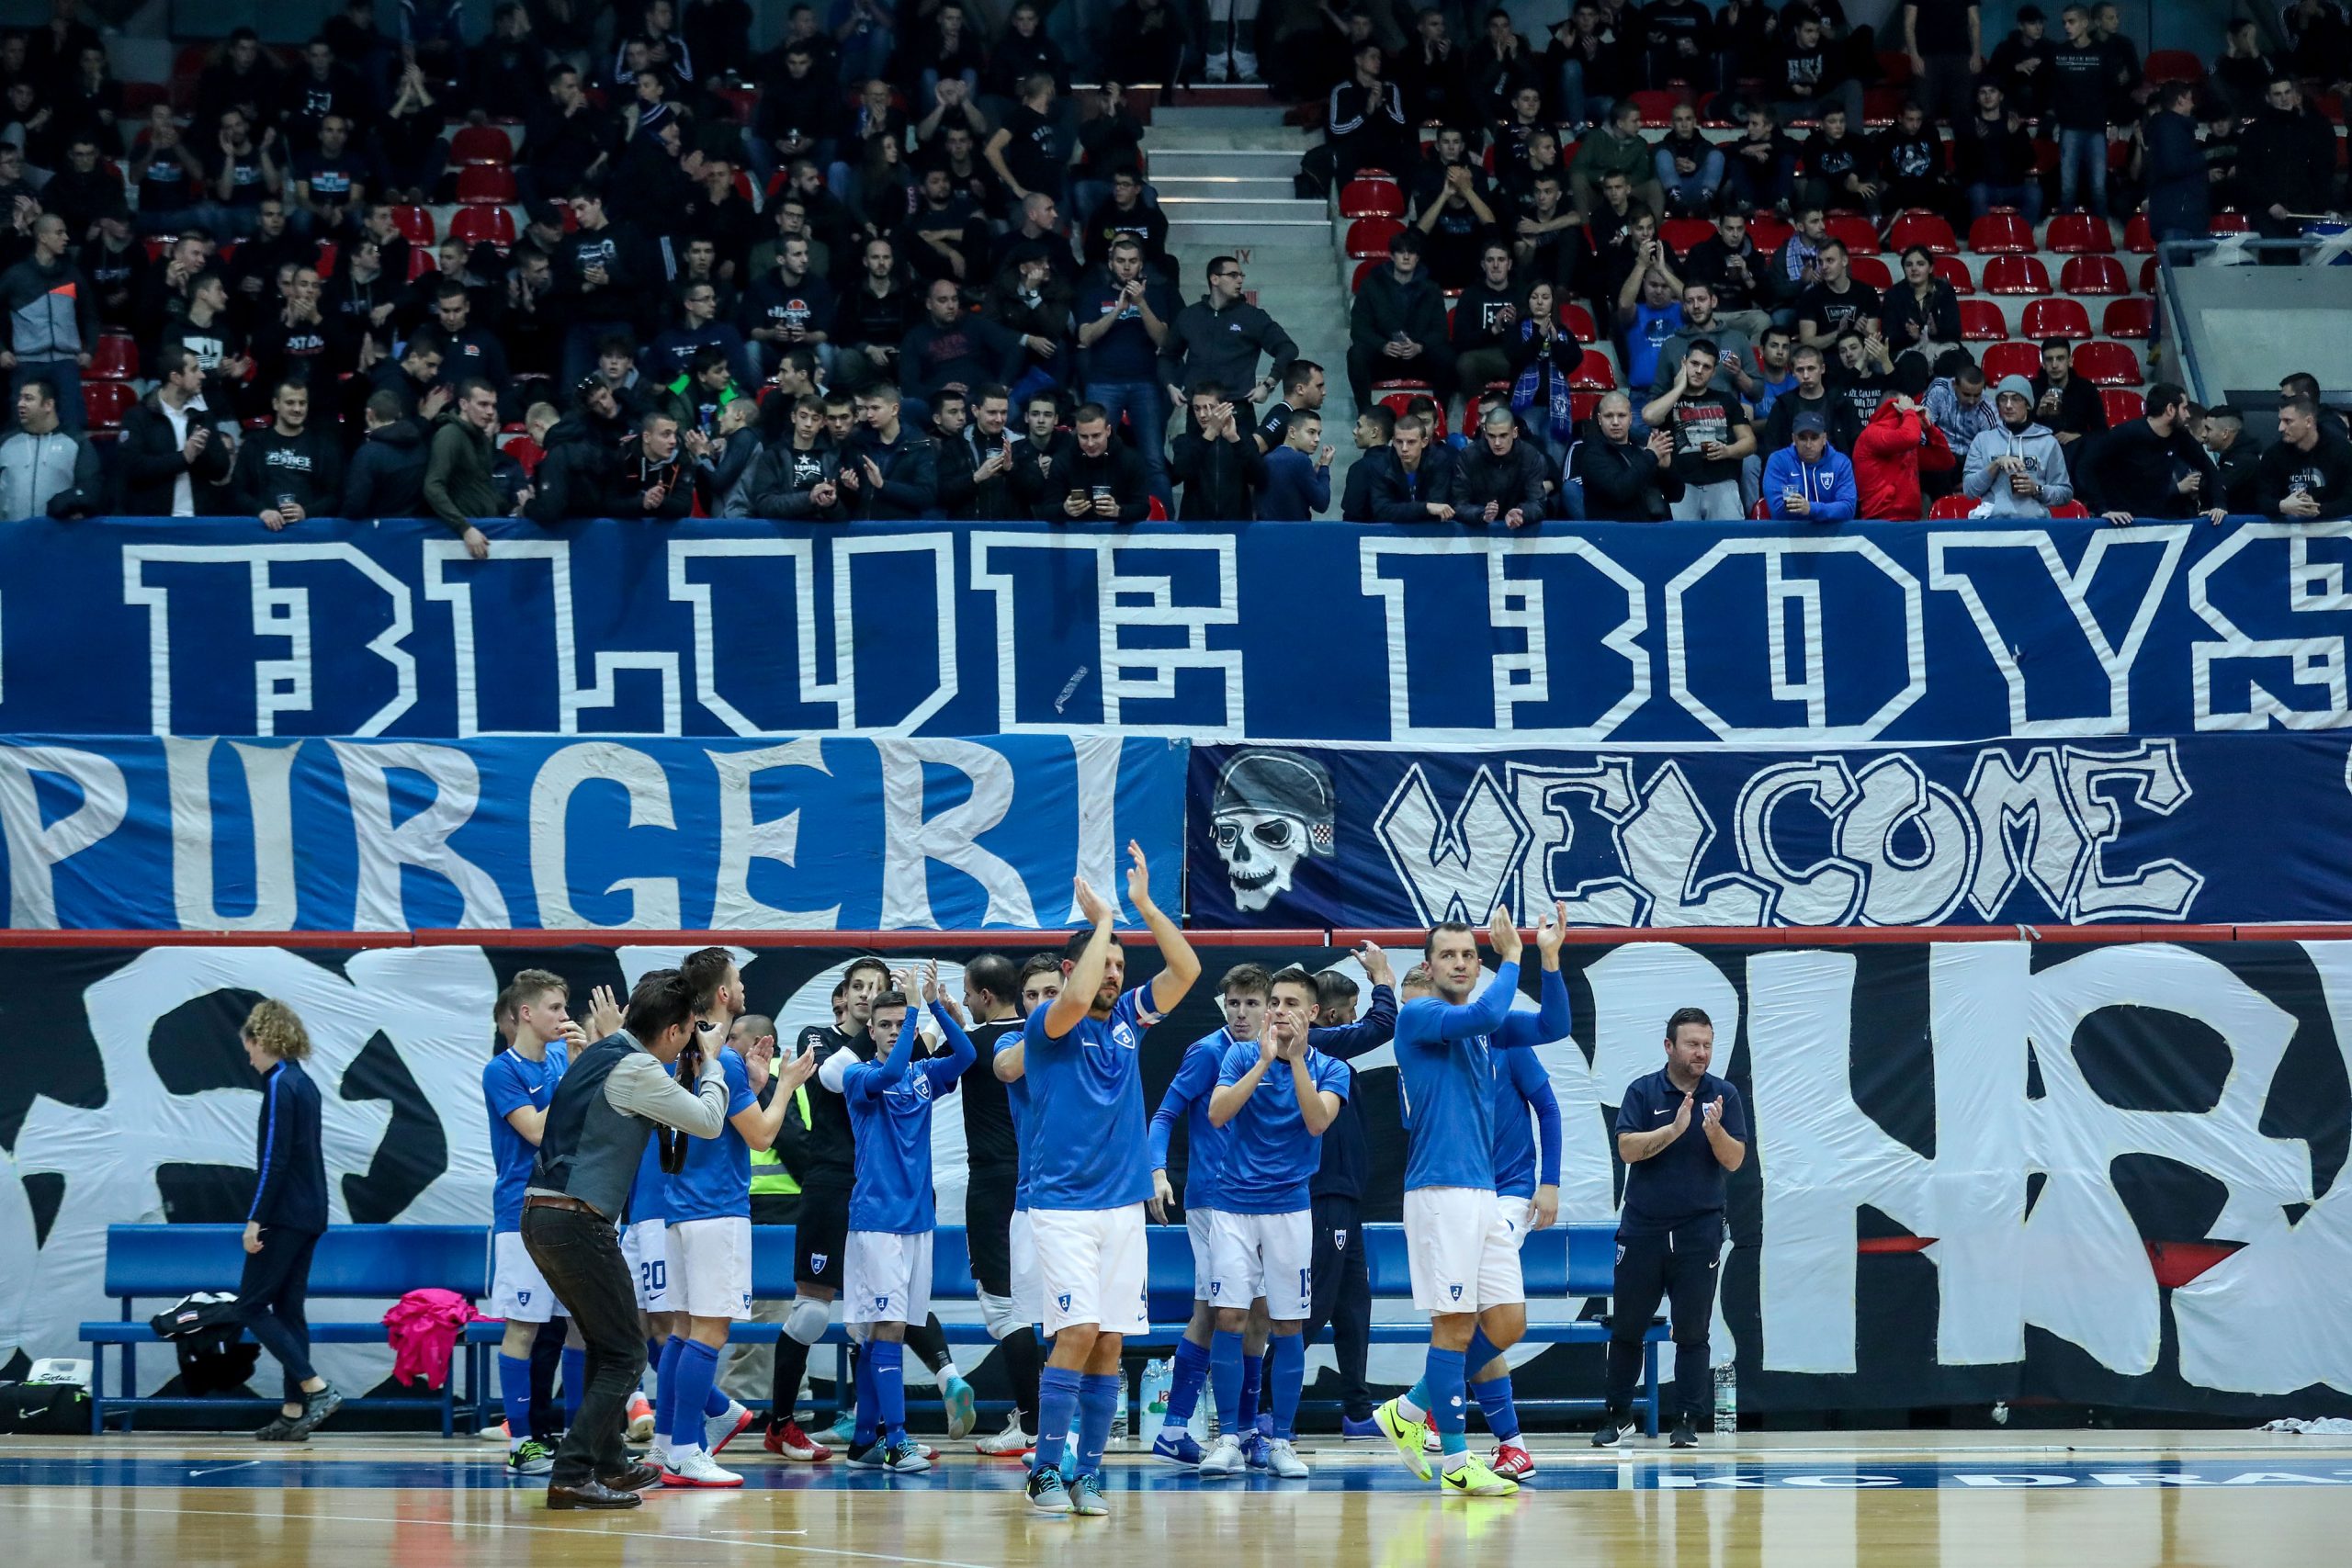 07.12.2019., Zagreb - U domu Drazena Petrovica odigrana futsal utakmica izmedju DInama i Hajduka.
Photo: Slavko Midzor/PIXSELL